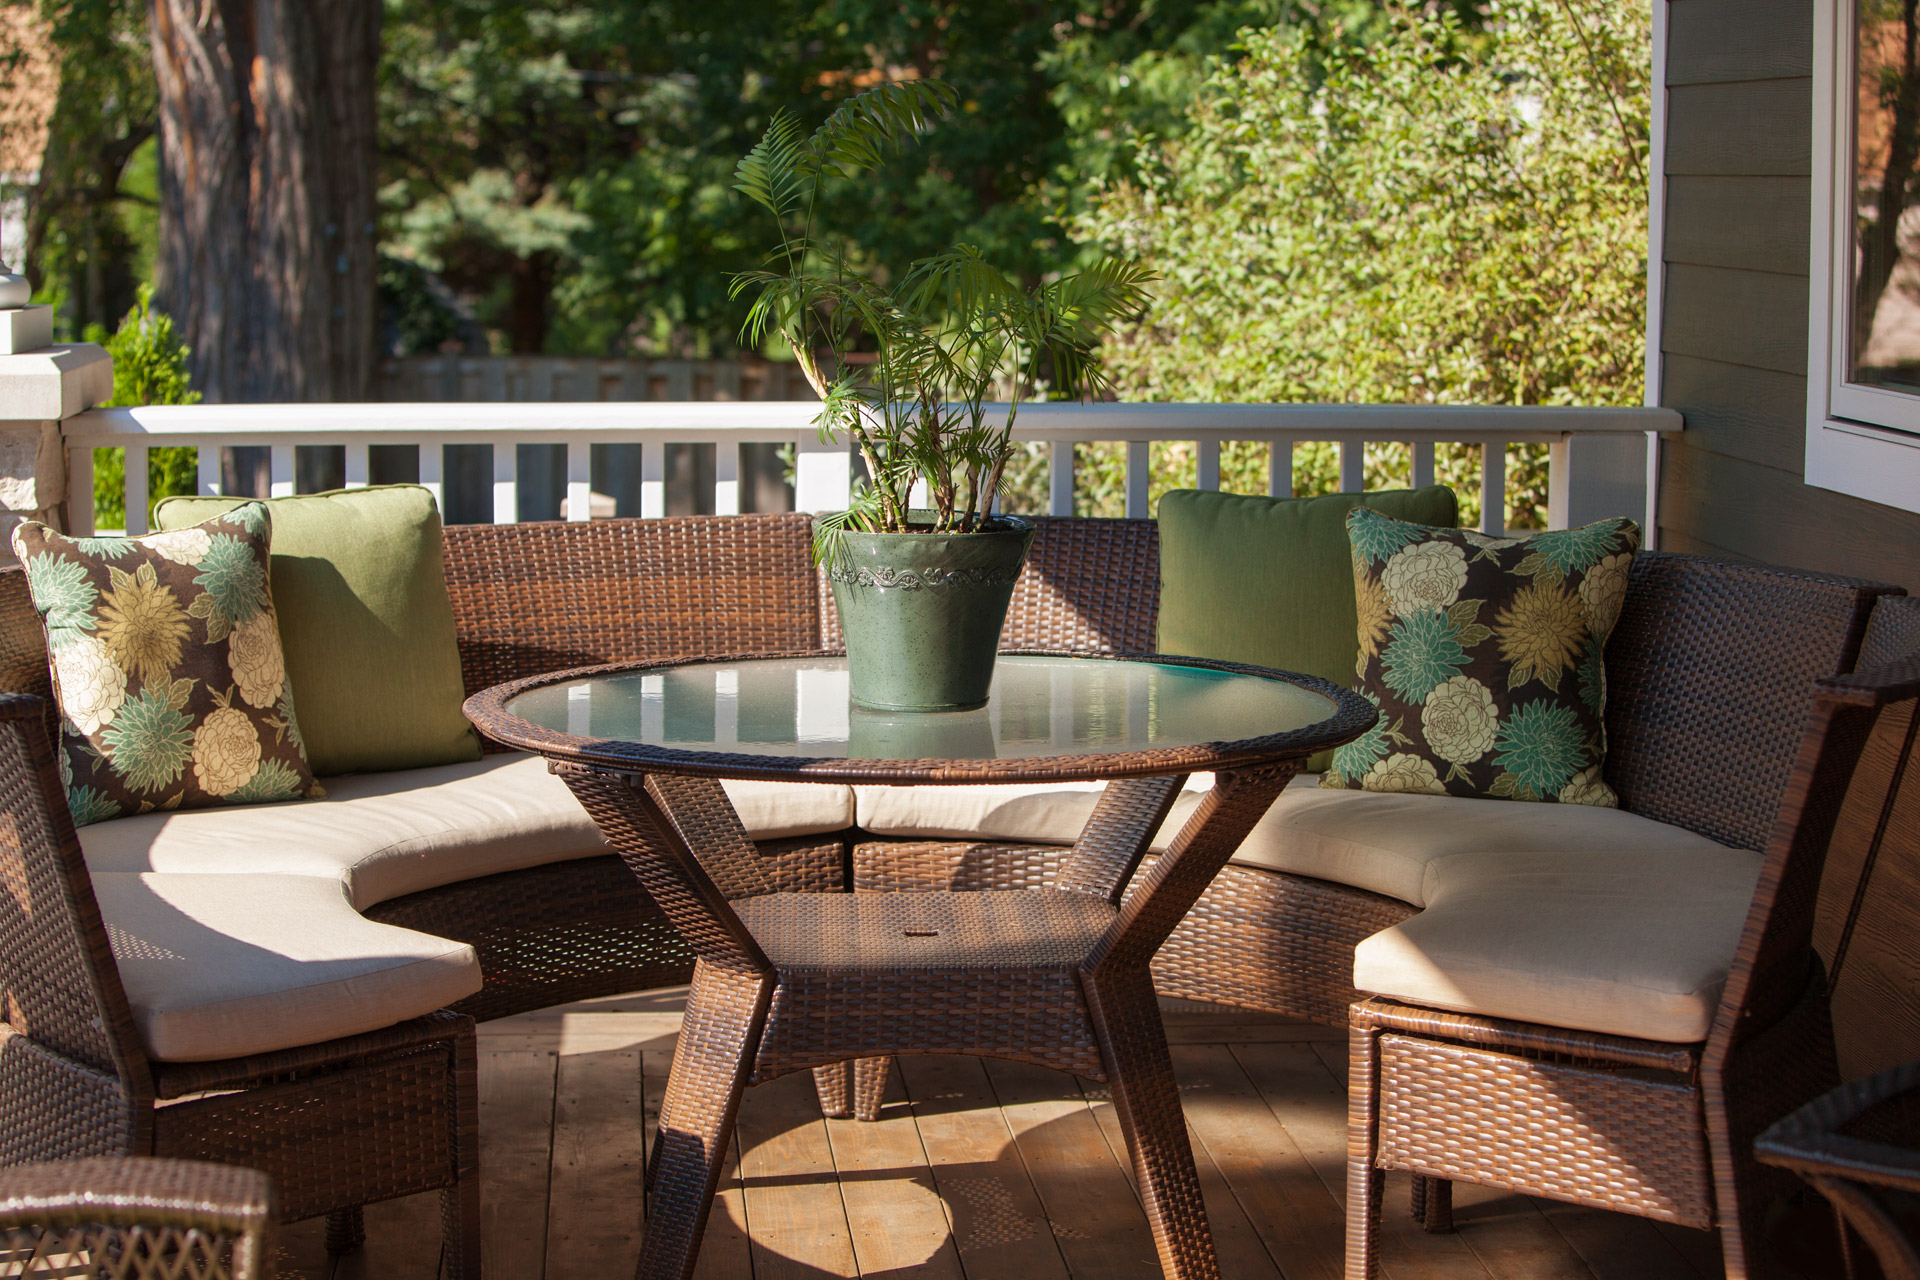 Outdoor backyard wicker furniture